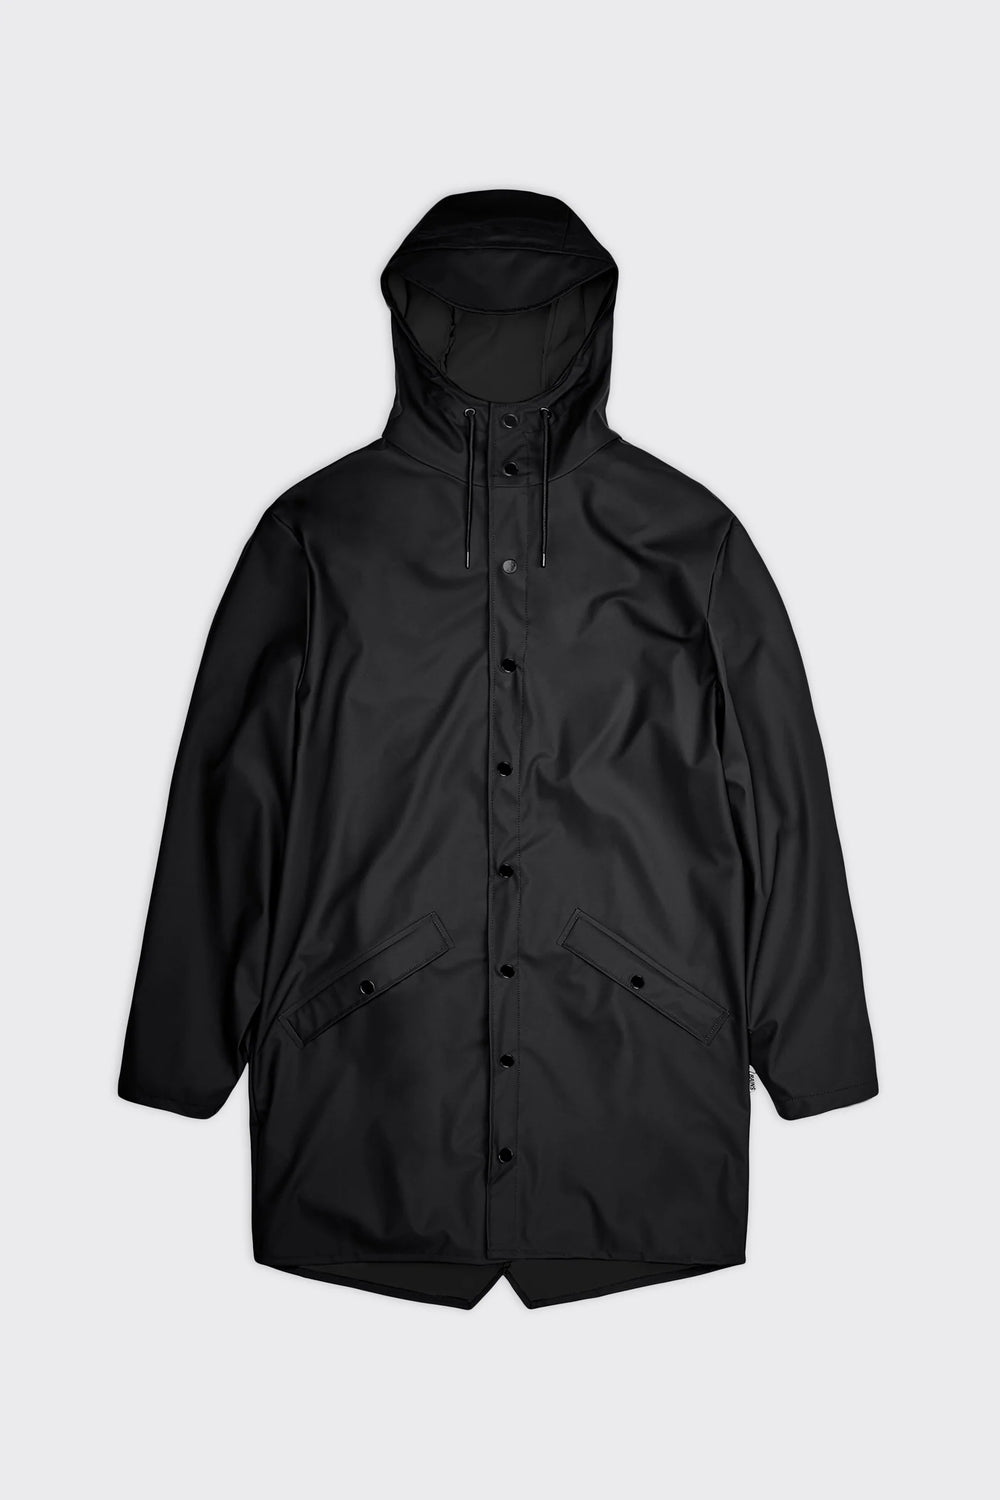 Long Jacket 12020 - Black